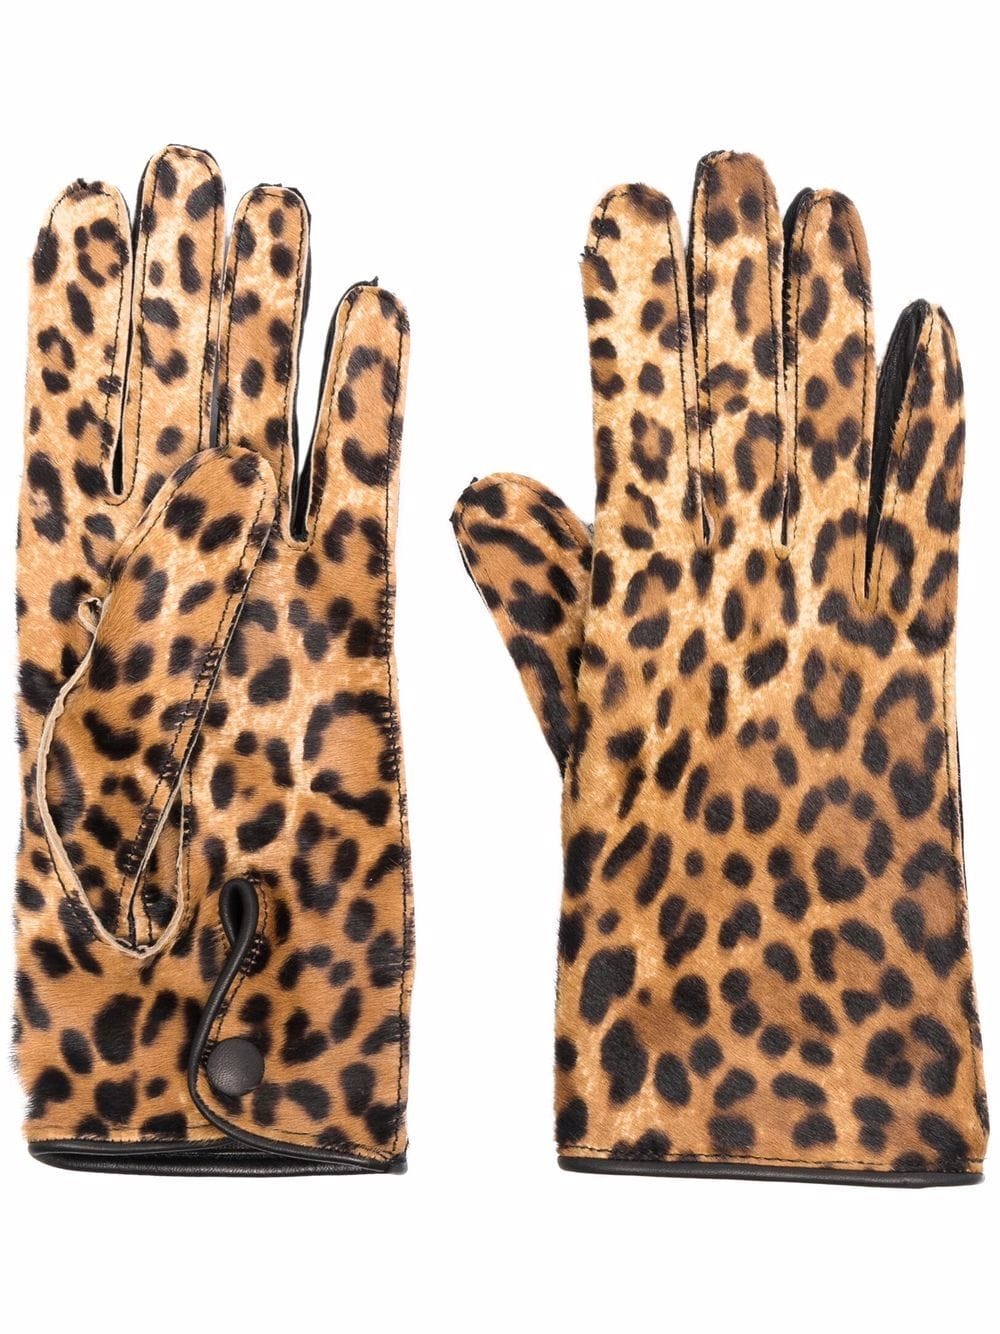 leopard-print gloves